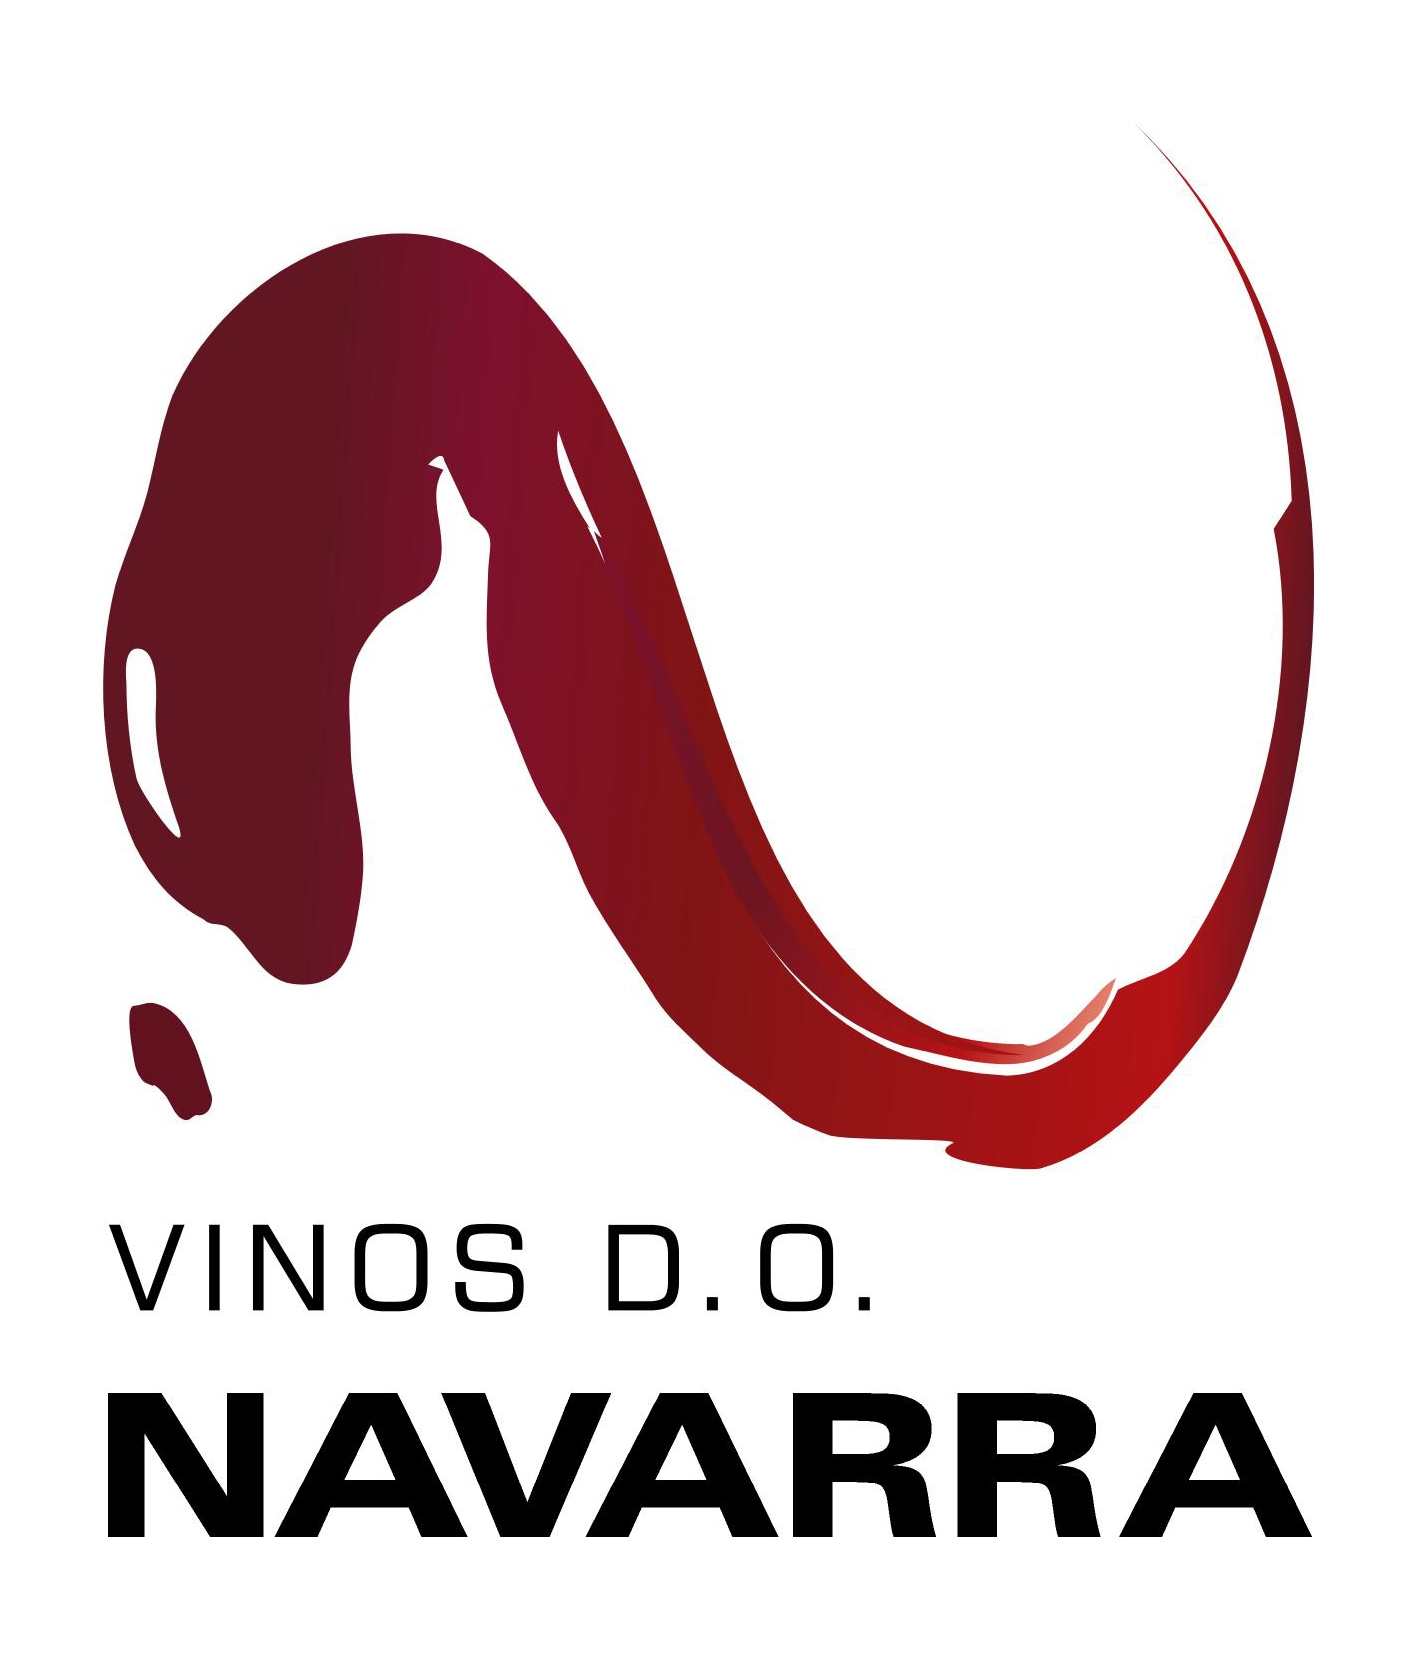 do-navarra-logo